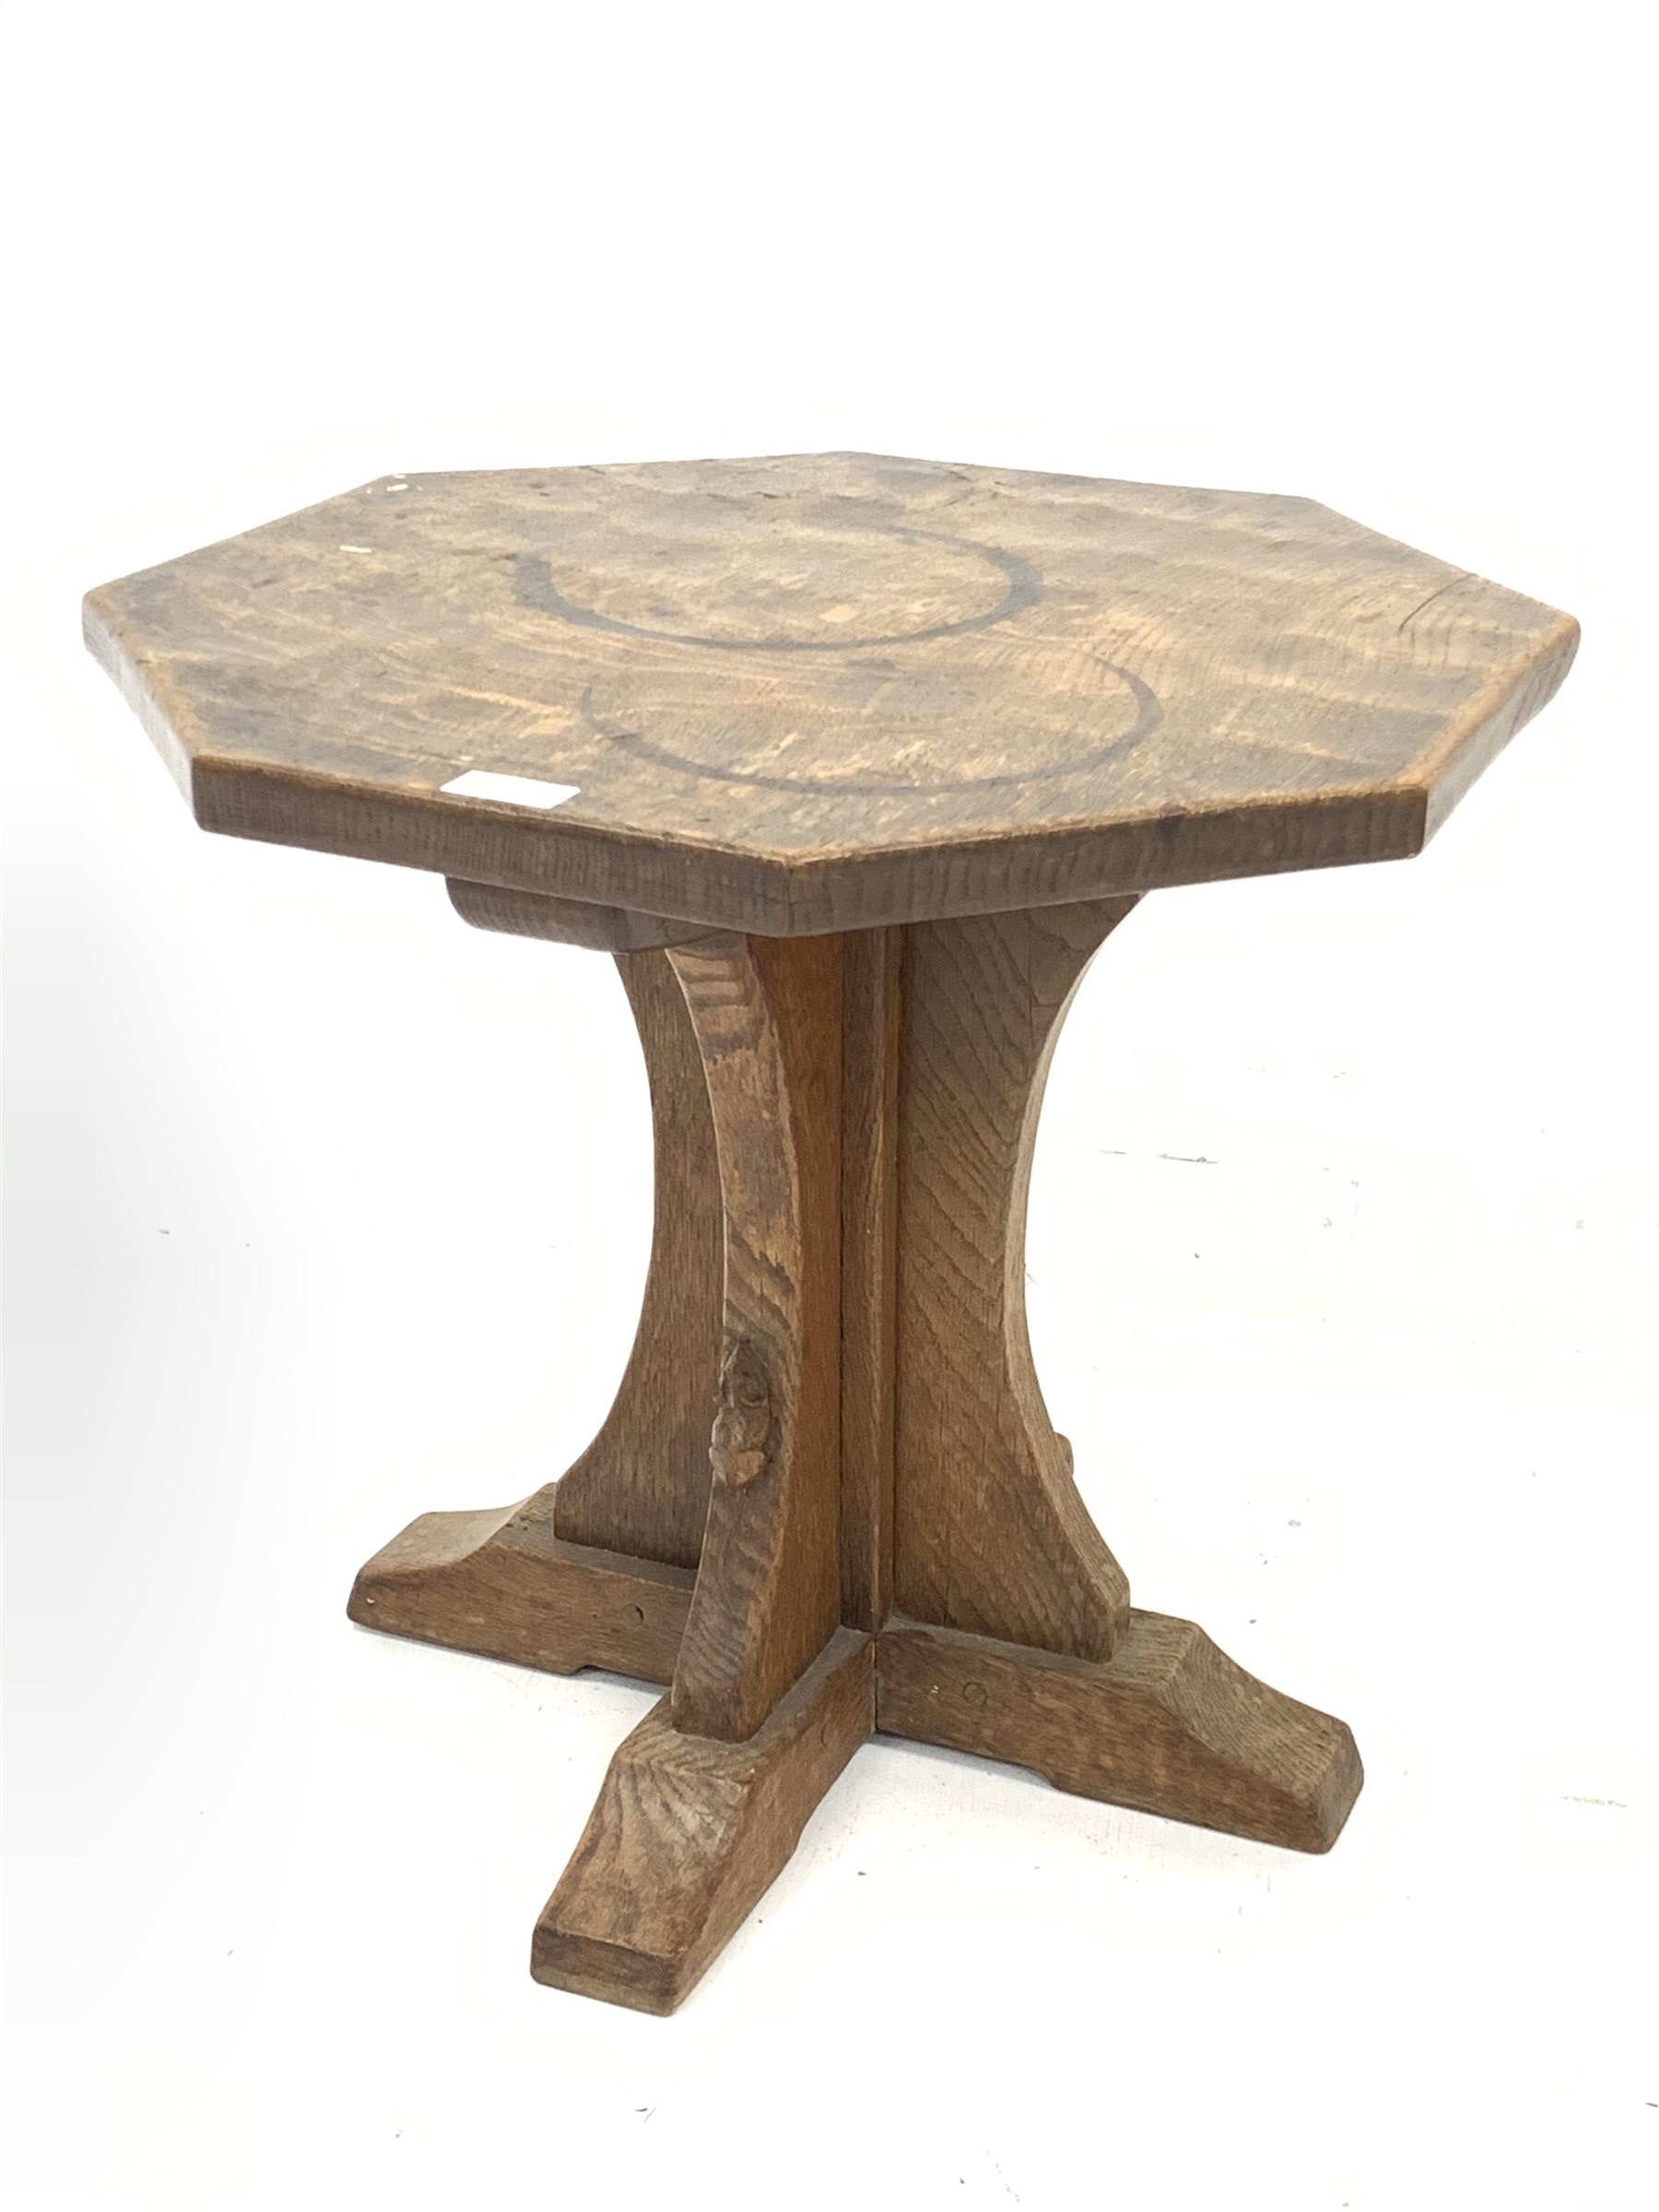 'Mouseman' oak octagonal side table, cruciform base on sledge feet, circa. 1950s, by Robert Thompson